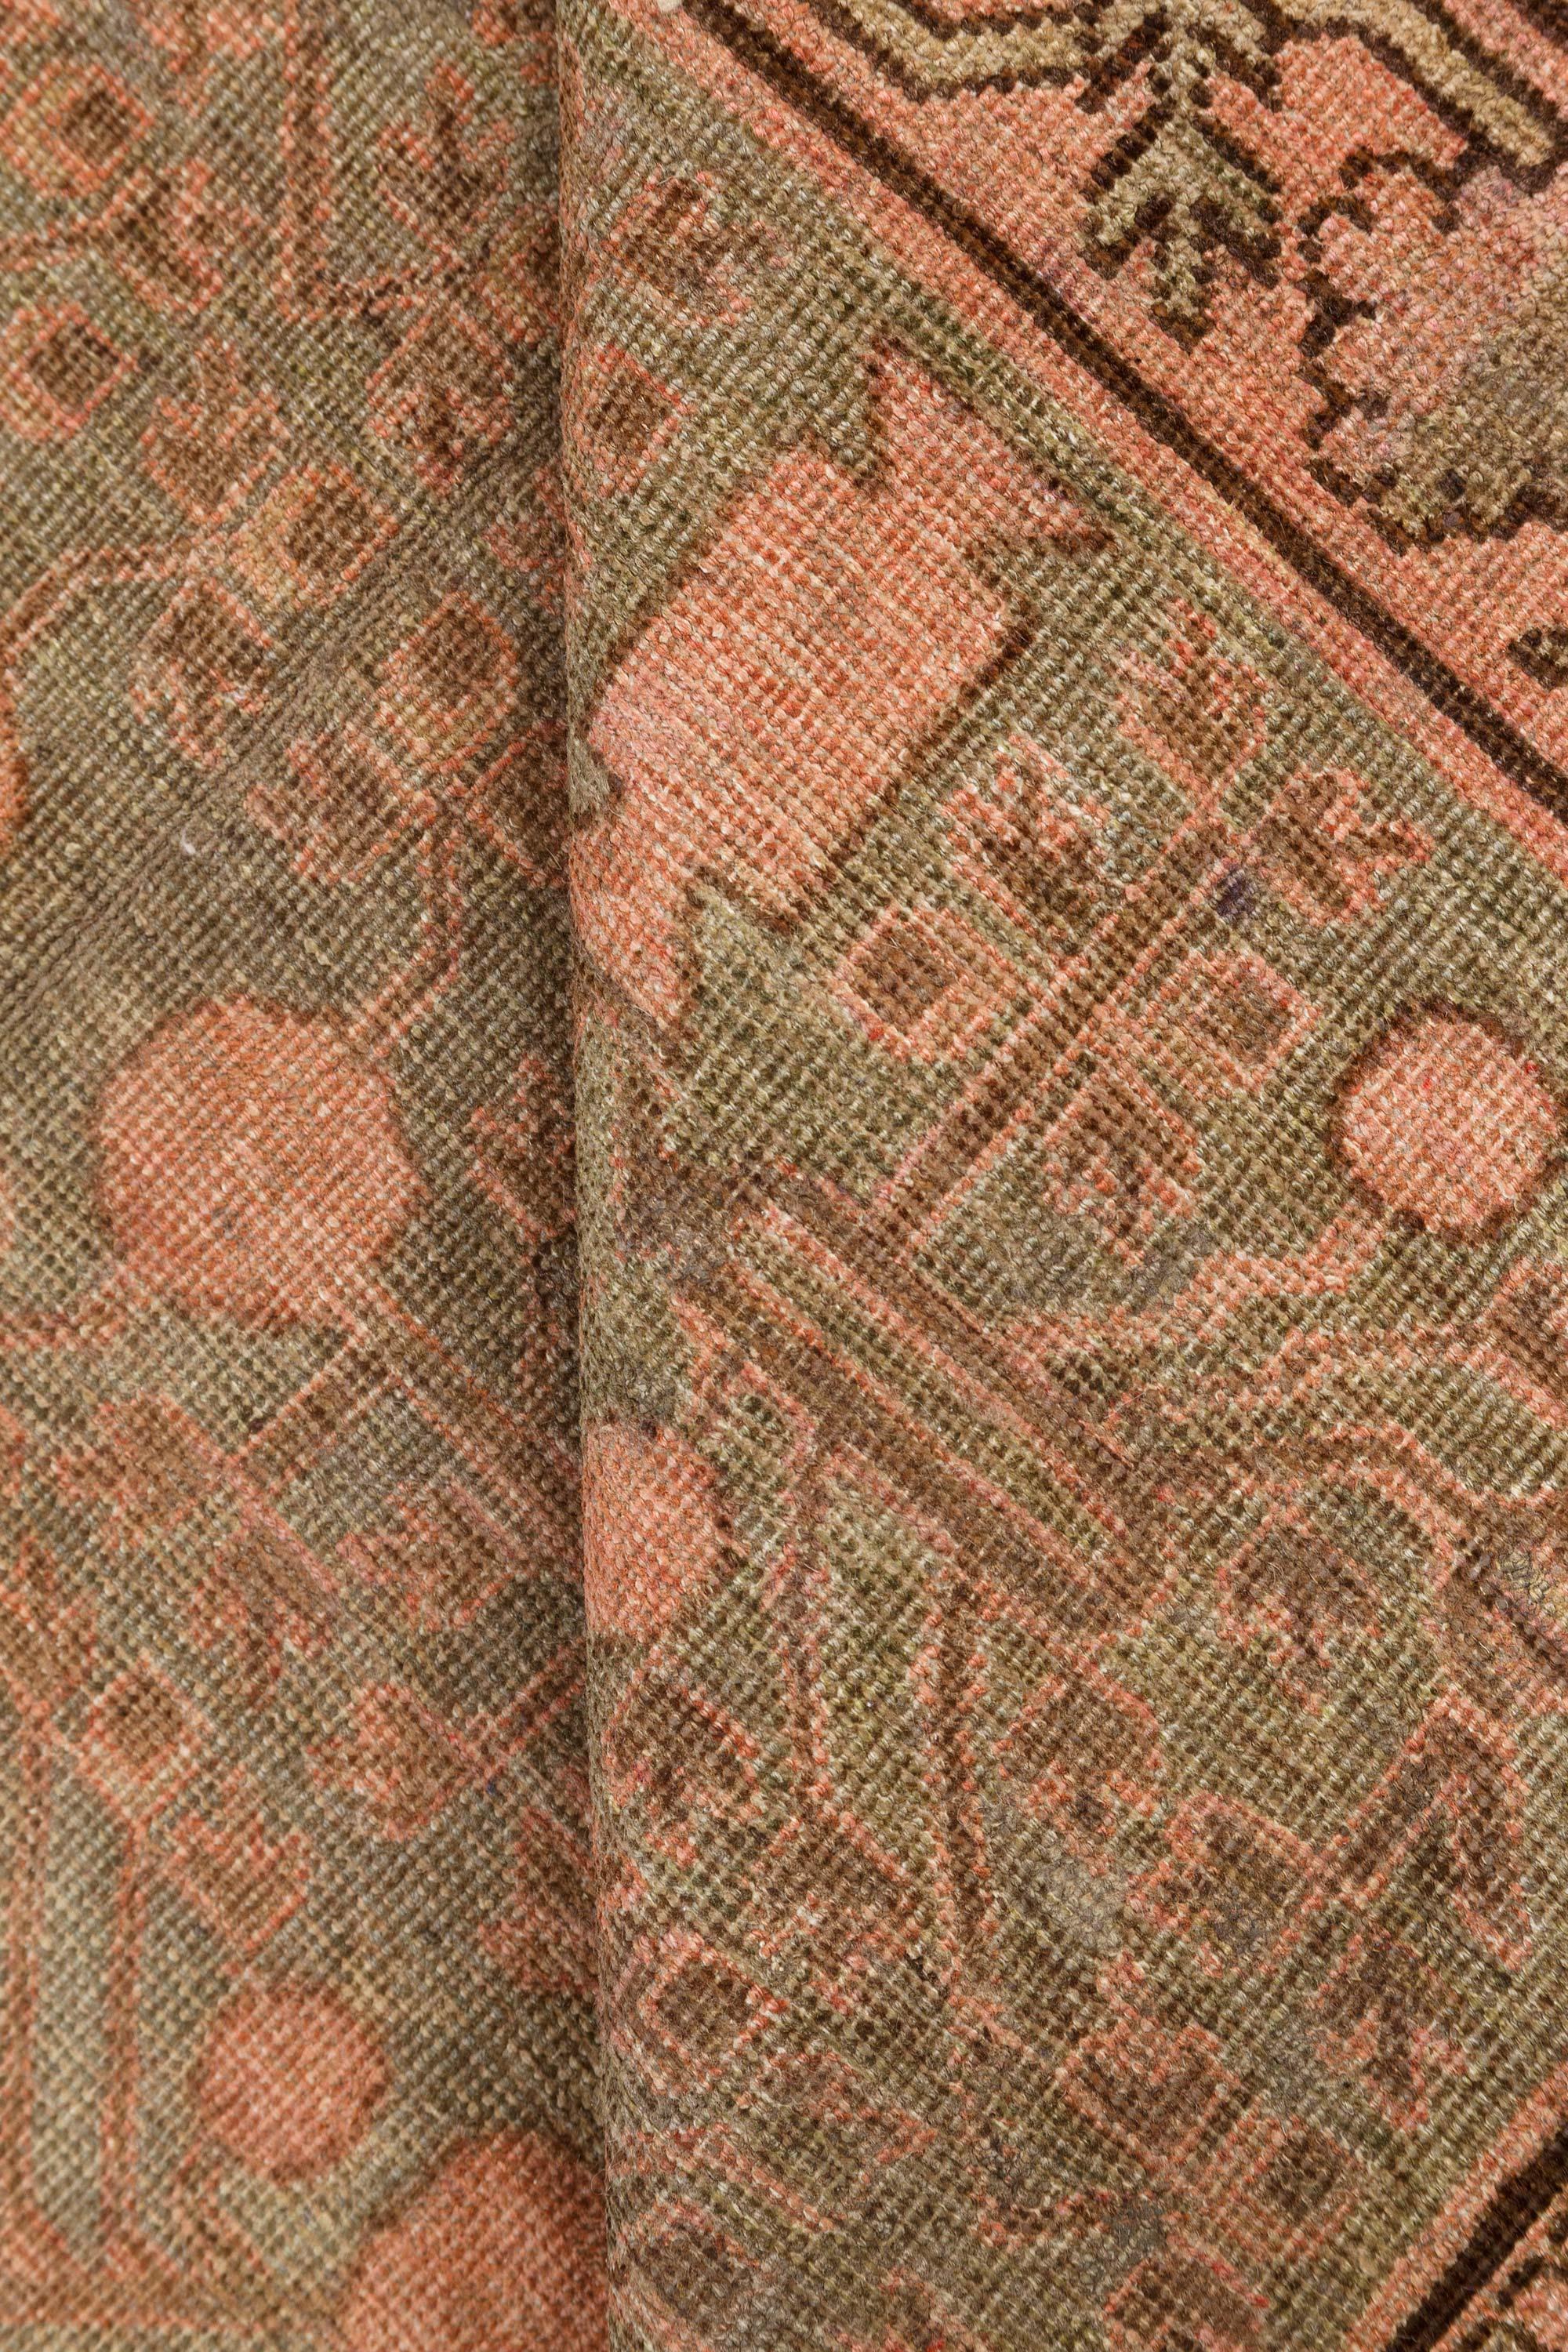 High-quality Vintage Samarkand 'Khotan' botanic handmade wool carpet
Size: 5'9